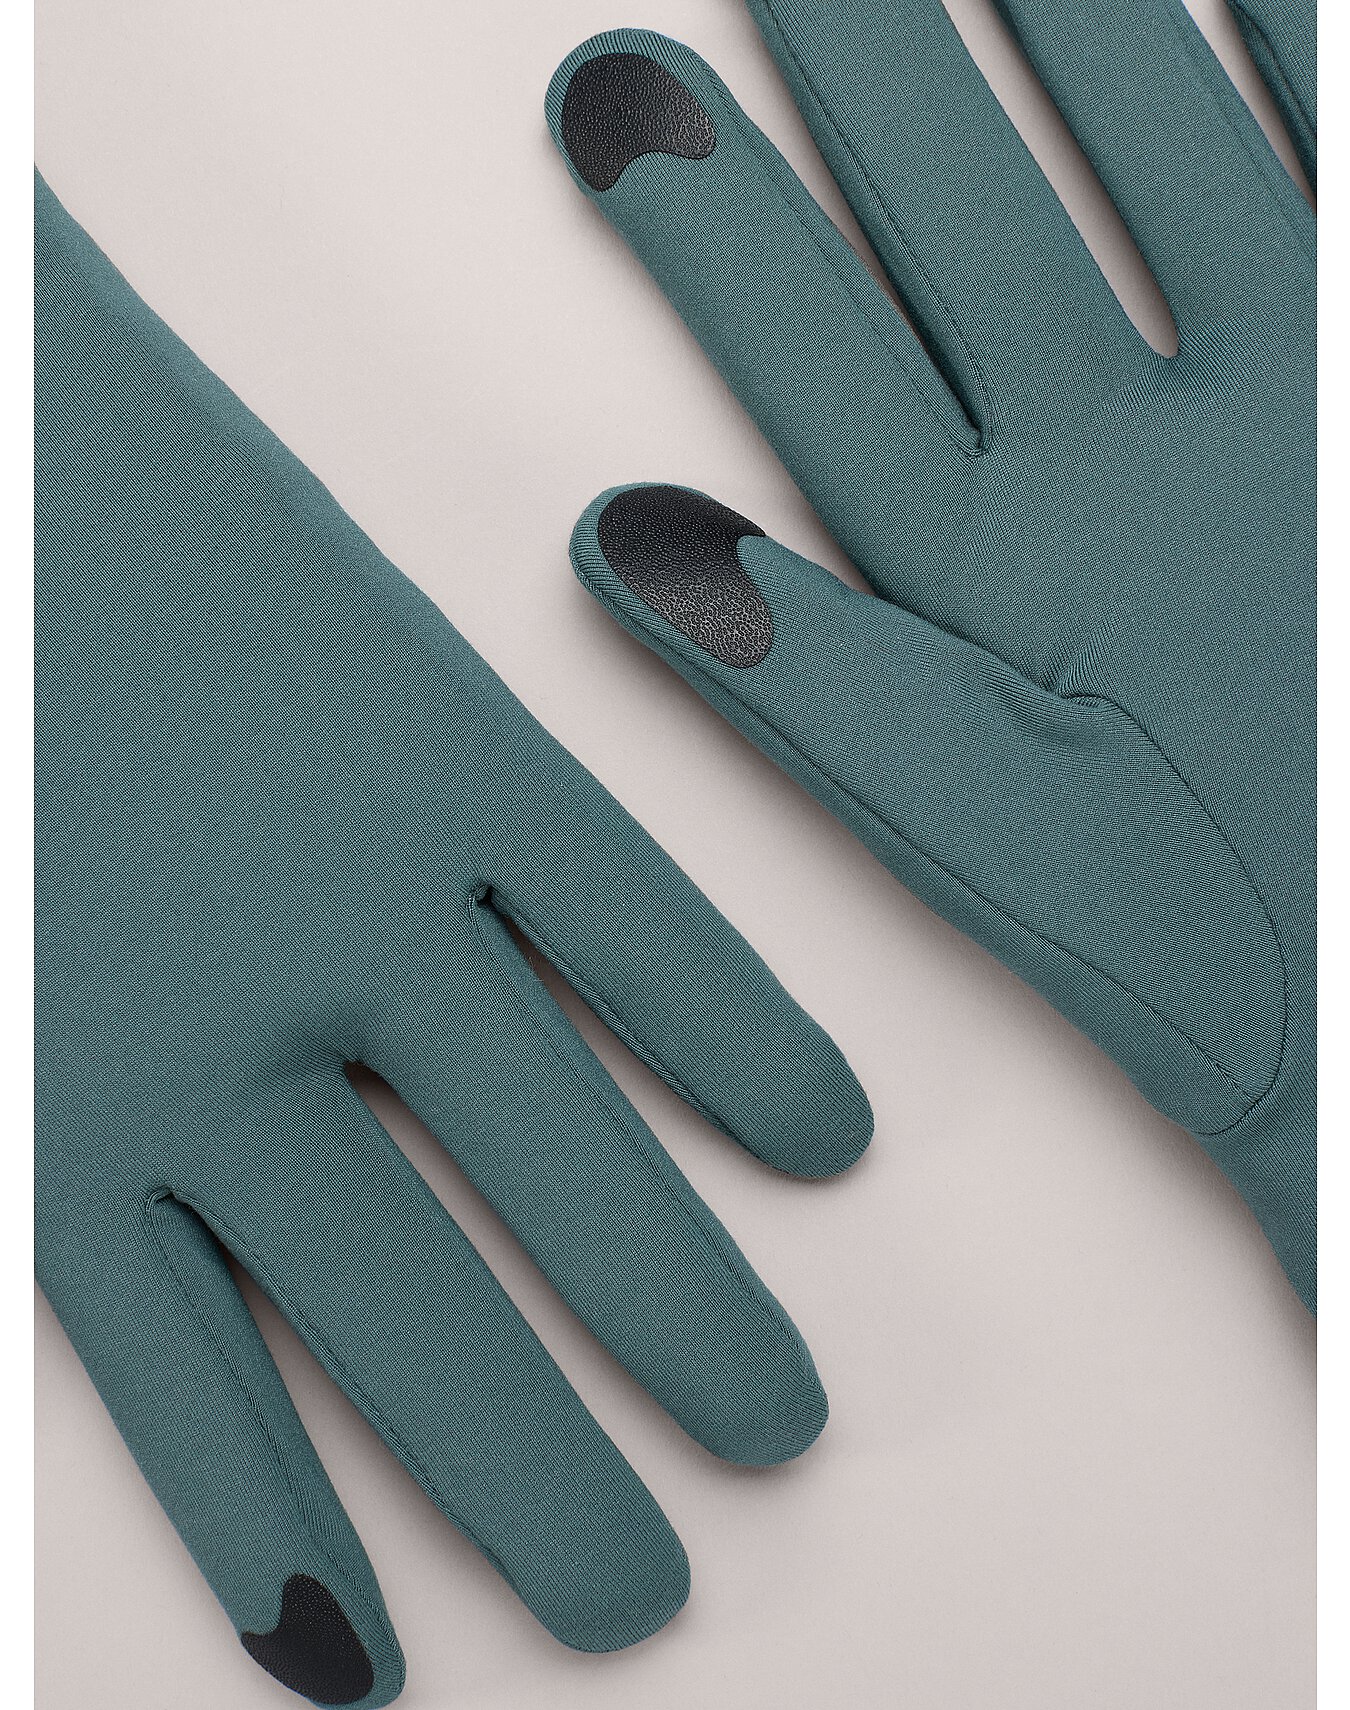 Handschuhe Rho Glove